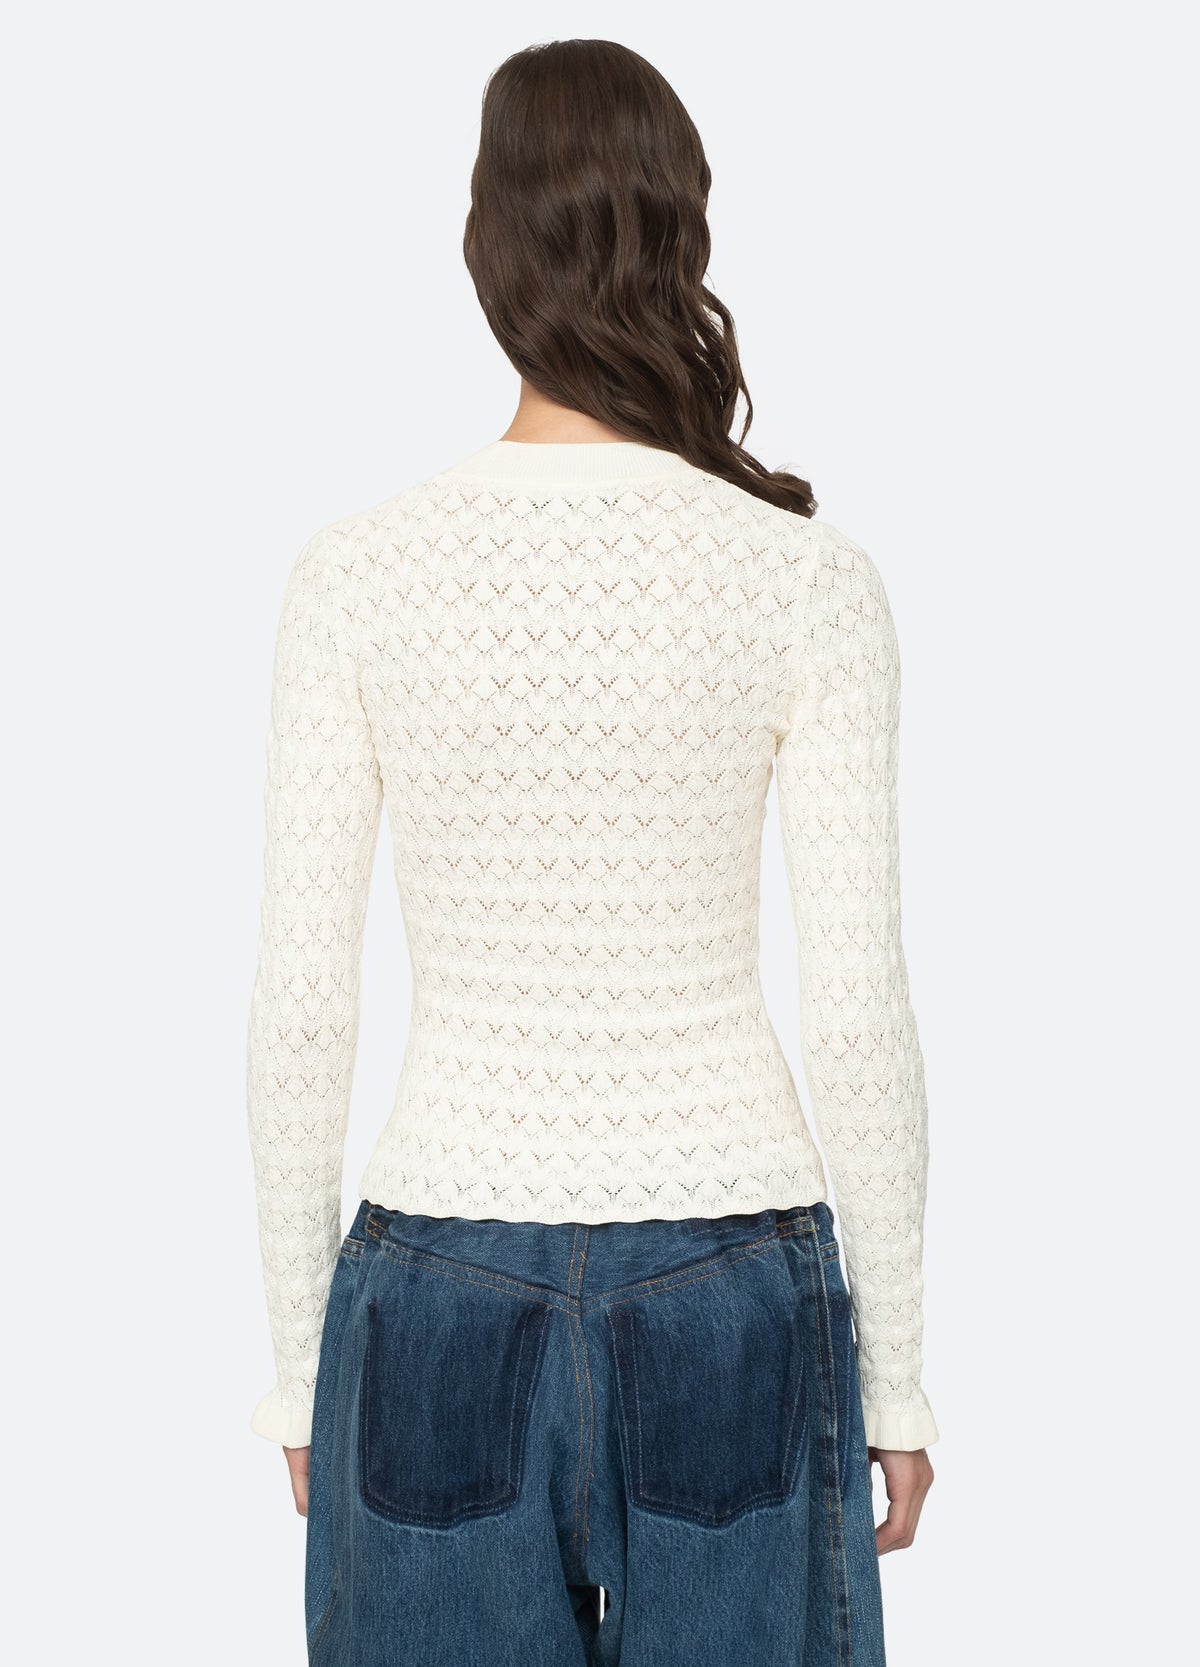 cream-rue sweater-back view - 10